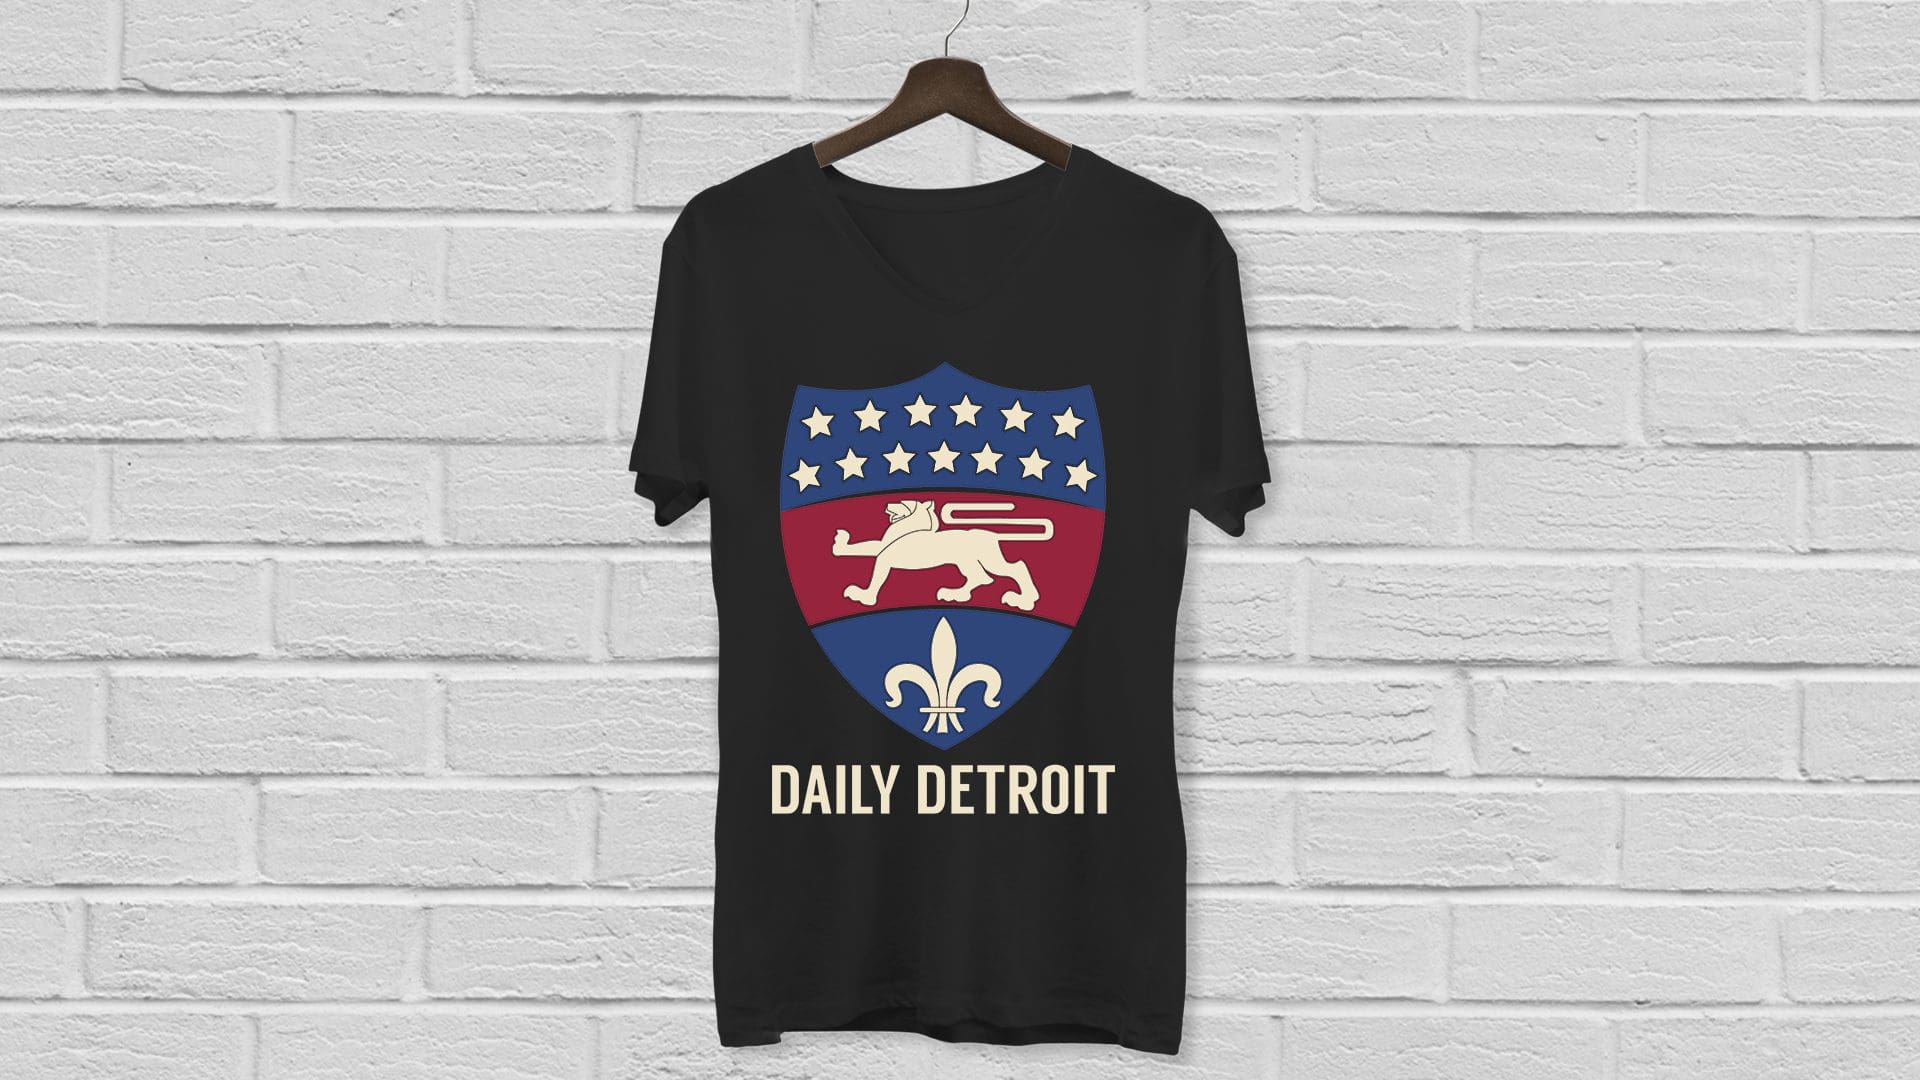 Daily Detroit - Silkscreen Shirt Mockup 01